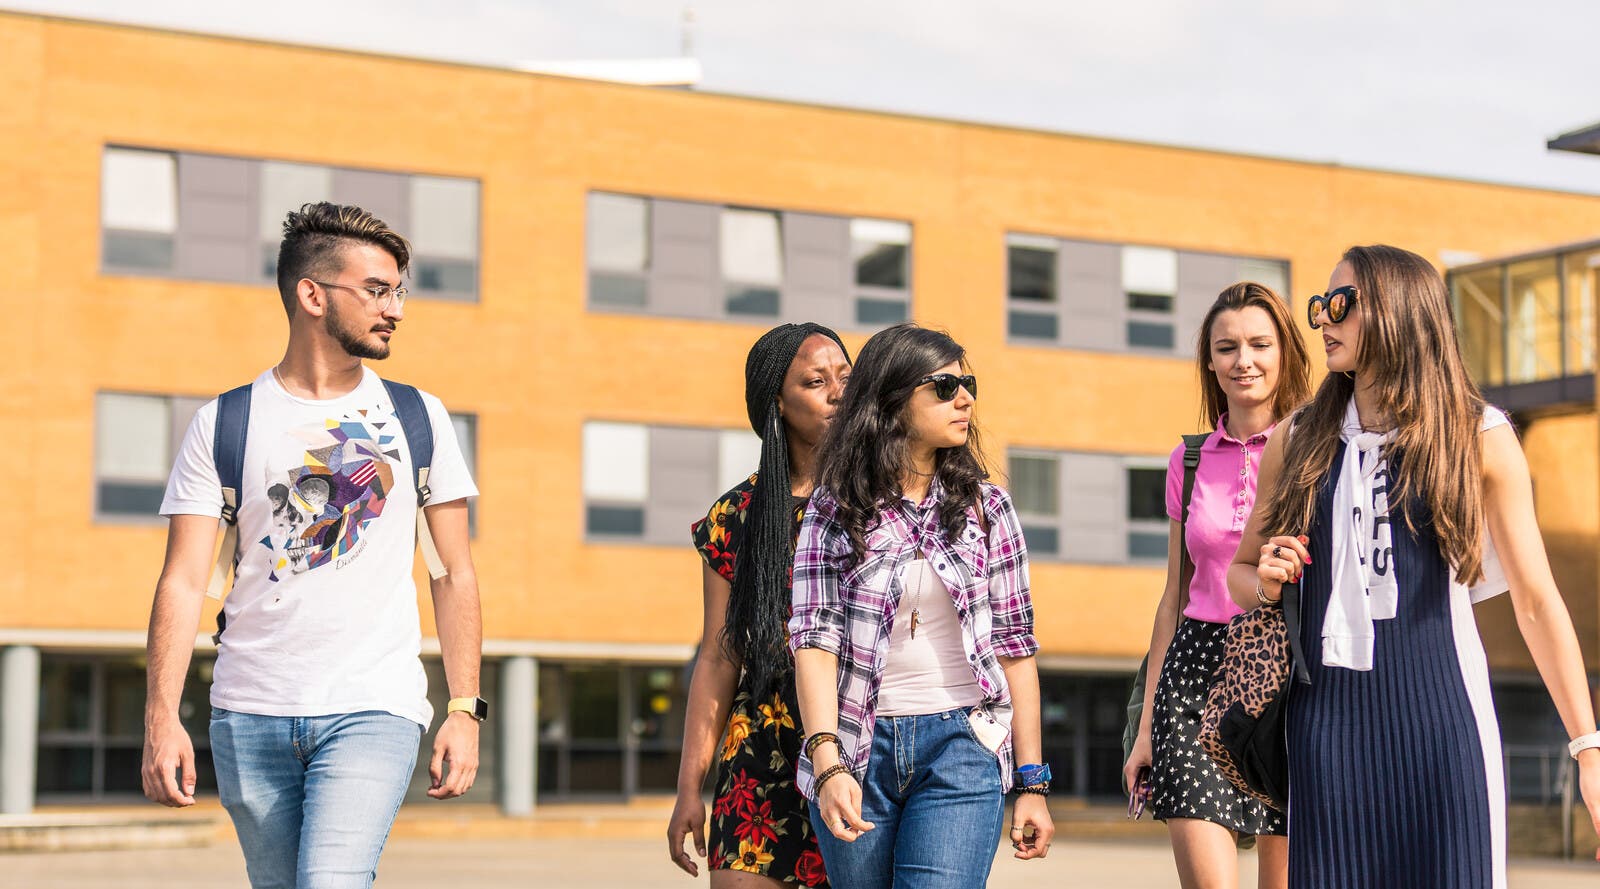 Surrey students walking on campus